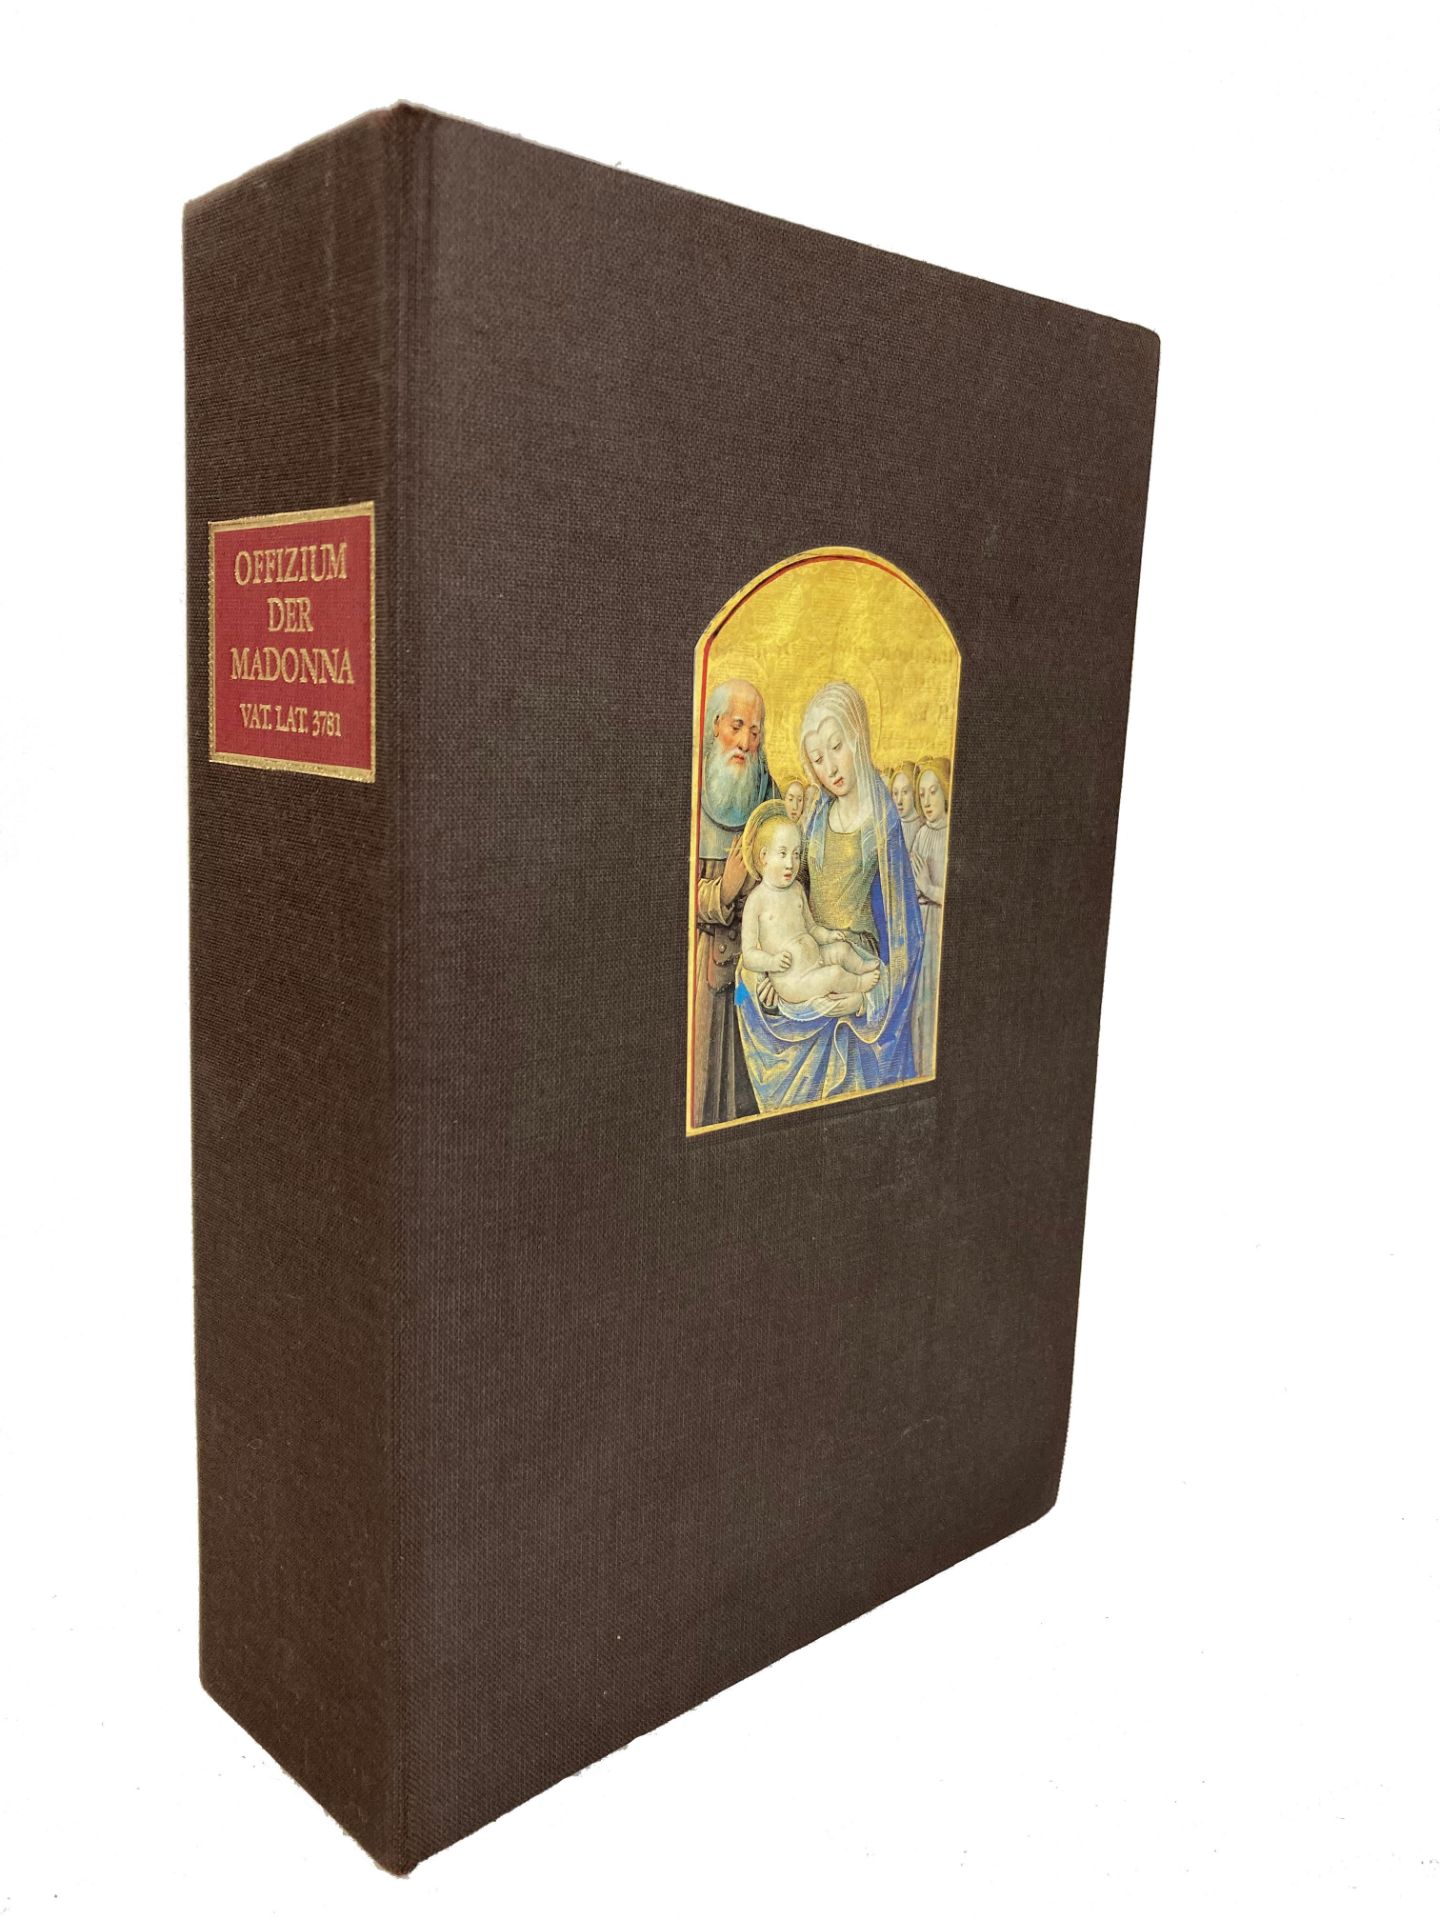 ILLUMINATED MANUSCRIPTS -- BOOK OF HOURS -- (OFFIZIUM DER MADONNA). Das Vatikanische Stundenbuch Jea